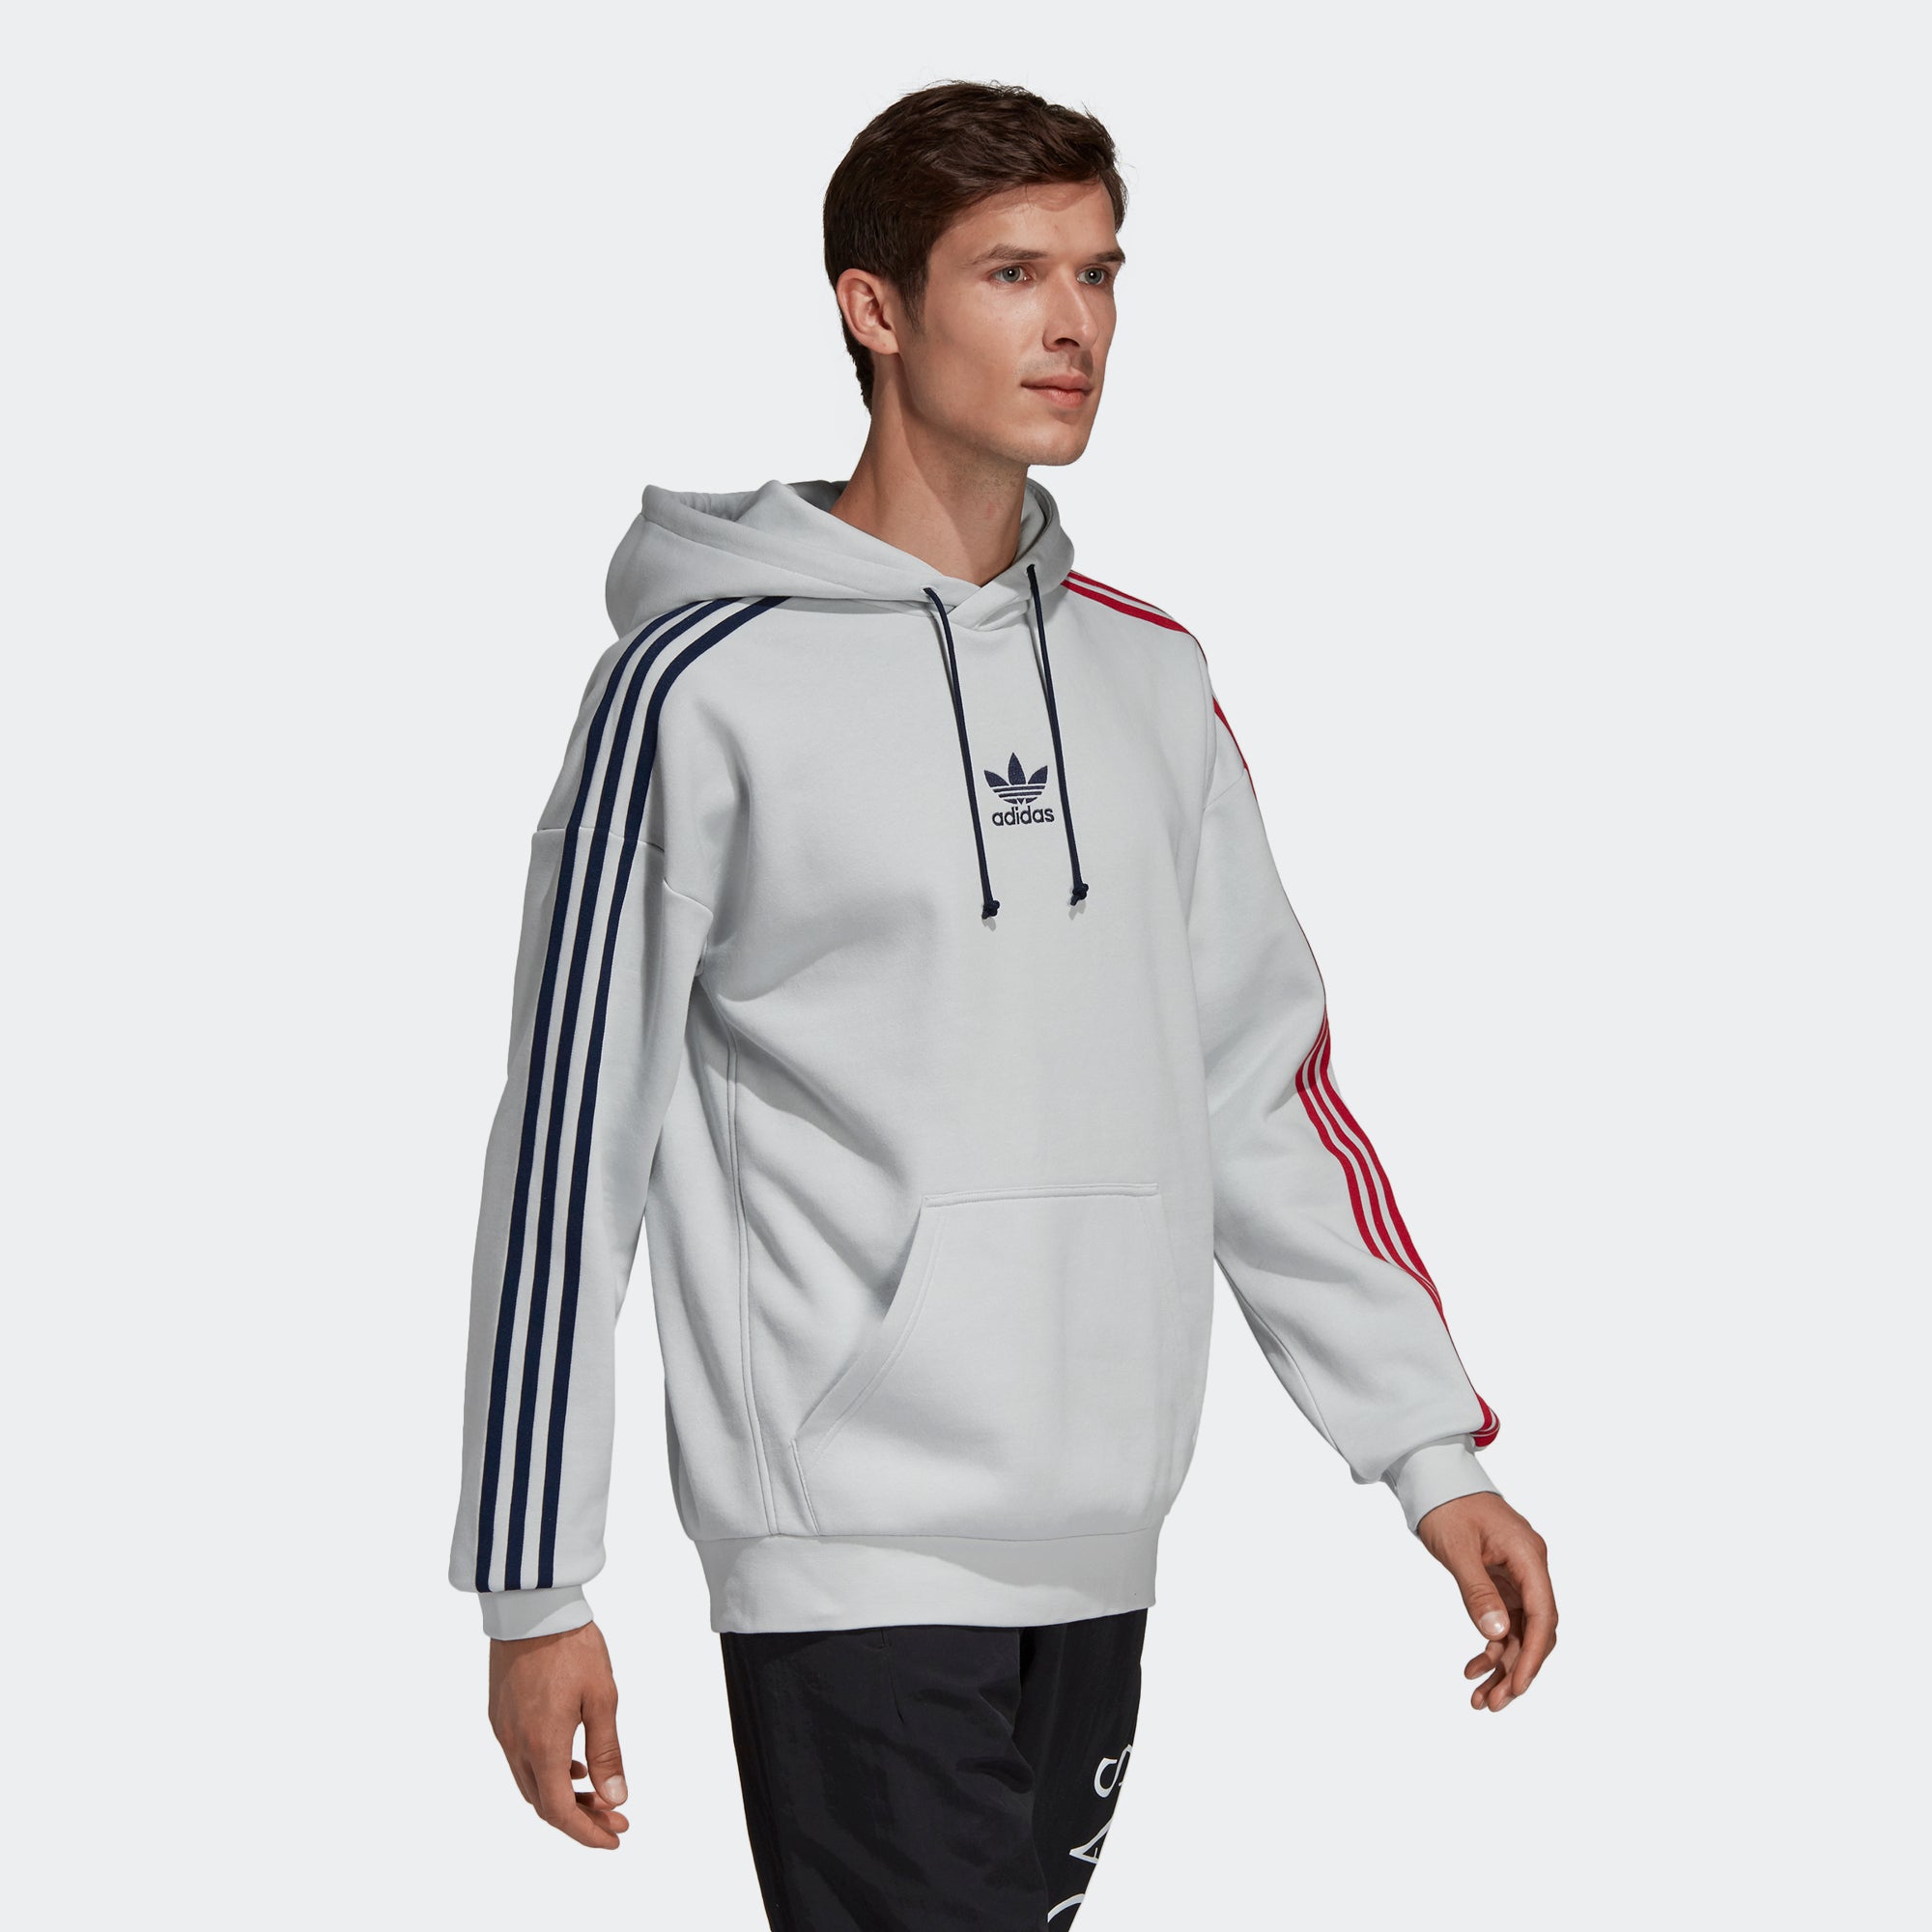 adidas 3 stripes hoodie grey